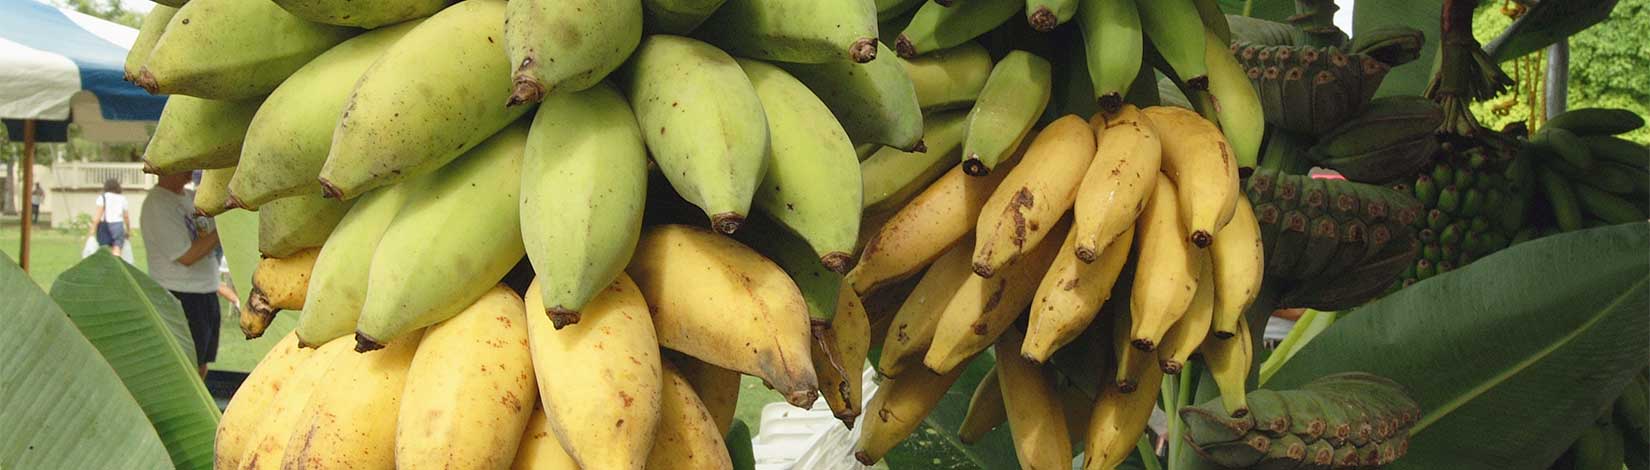 Grow a Backyard Bounty of Bananas - UF/IFAS Extension Hernando County